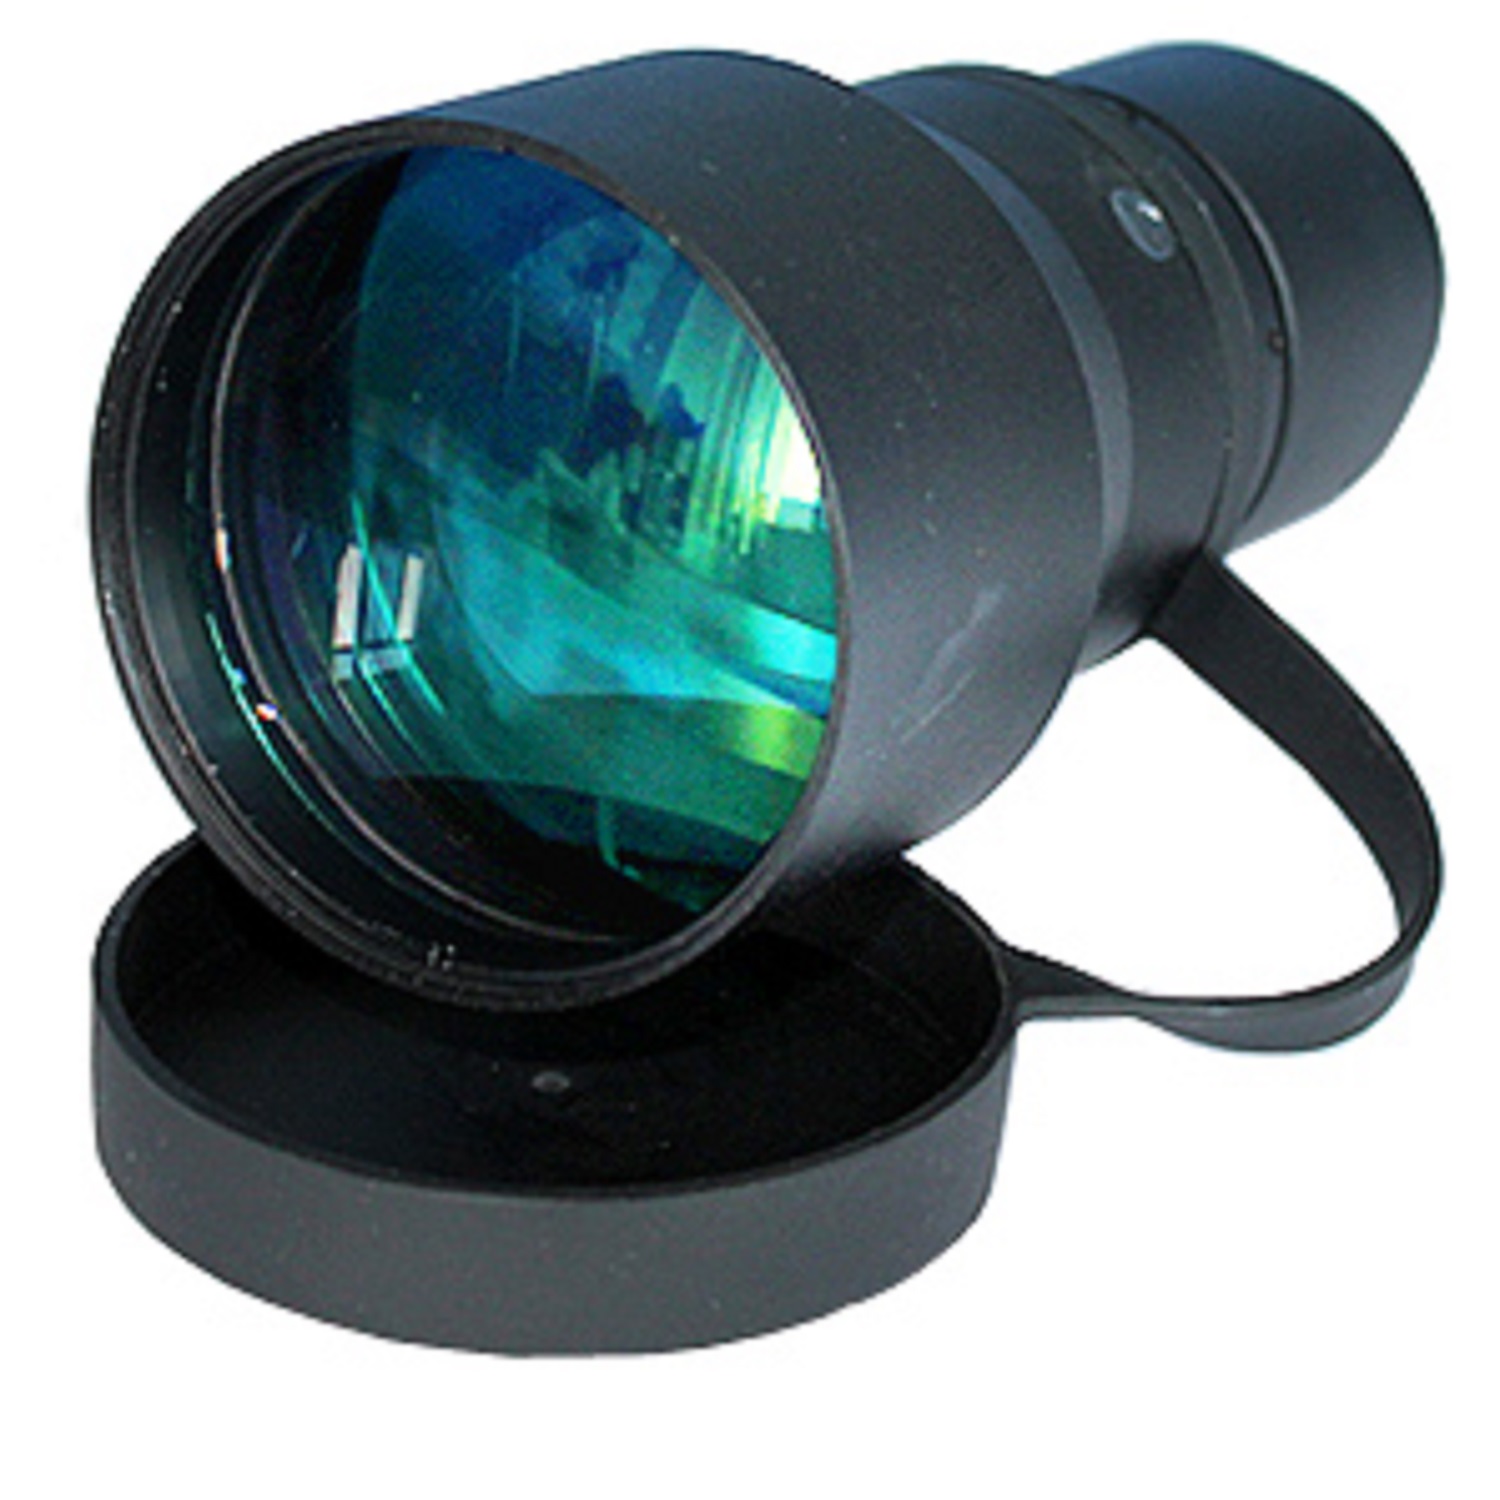 Bering Optics 3x Objective Lens - Be80203